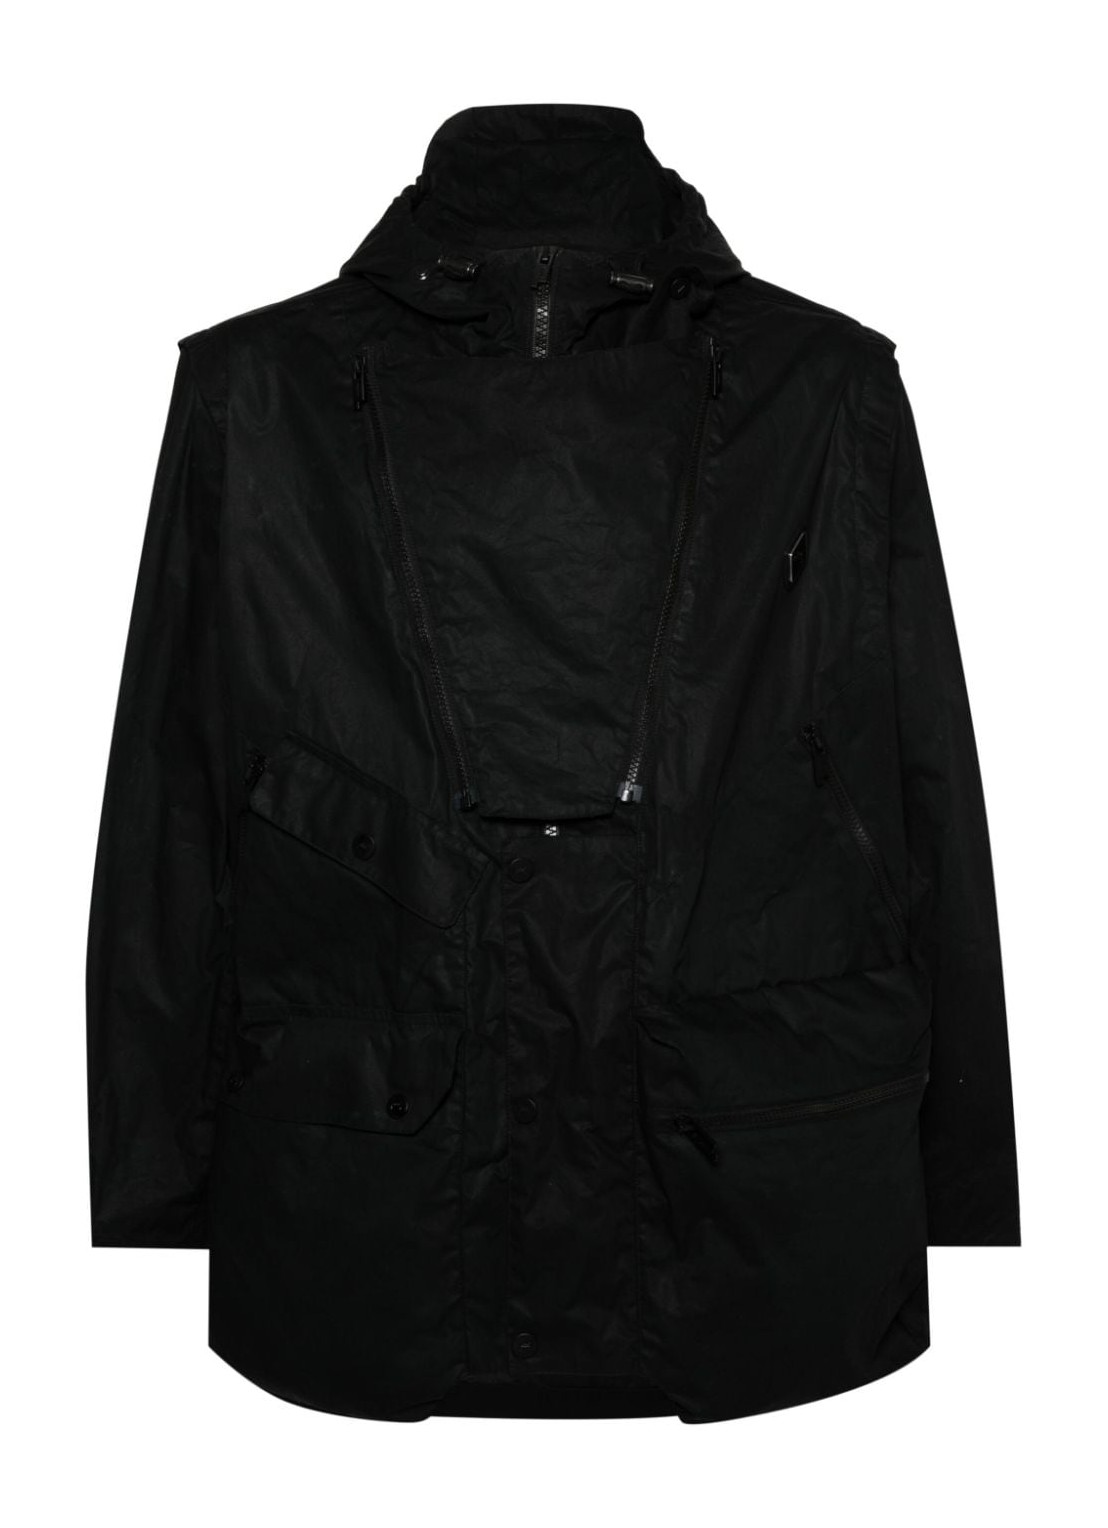 Outerwear a-cold-wall* outerwear mancargo storm jacket - acwmo254 onyx onyx talla XL
 